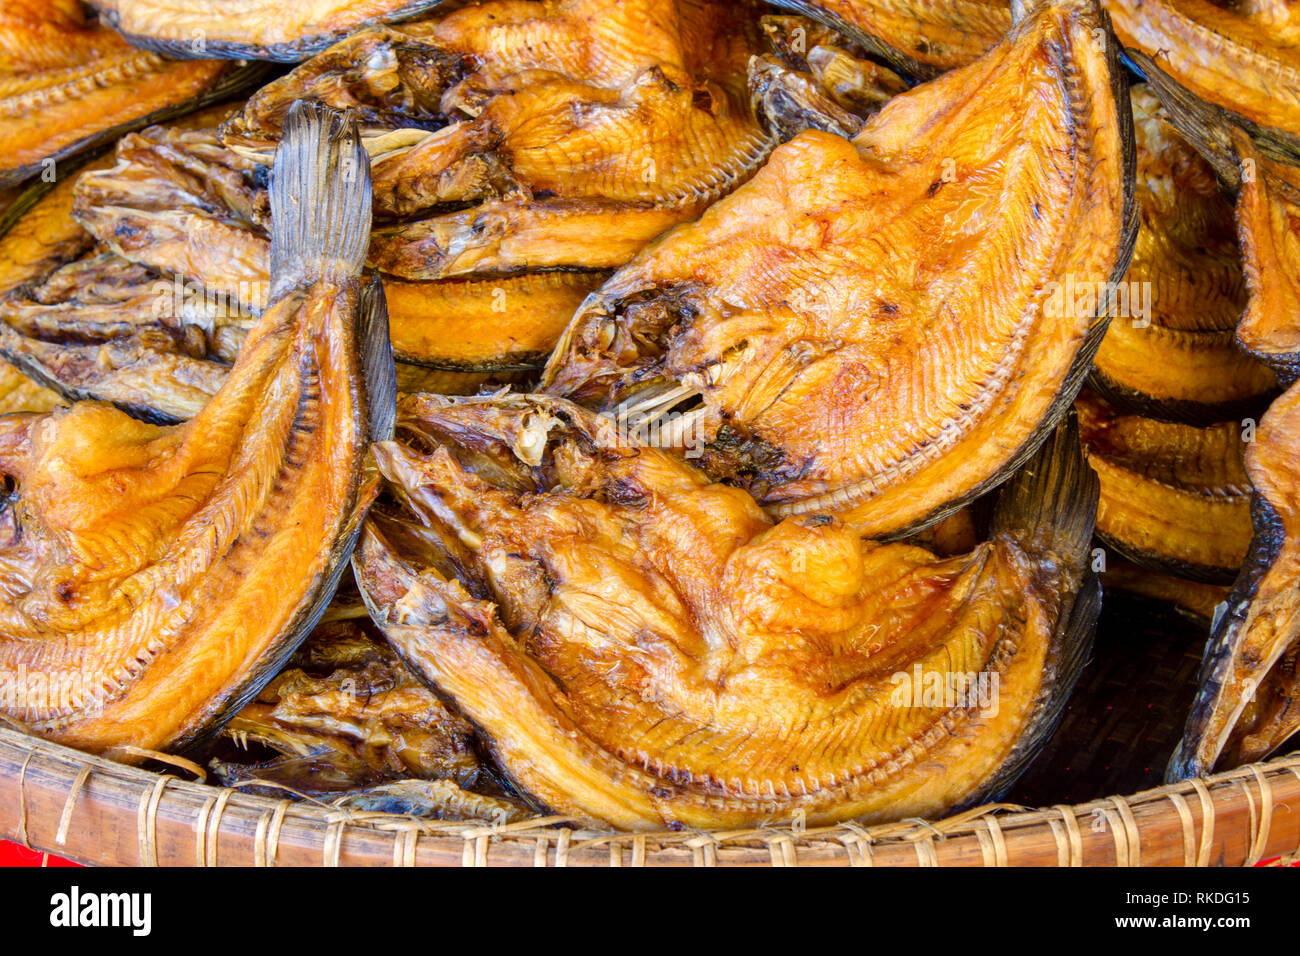 An arrangement of dried freshwater fish or pla haeng at a local fresh fish market in Bangkok, Thailand. Stock Photo